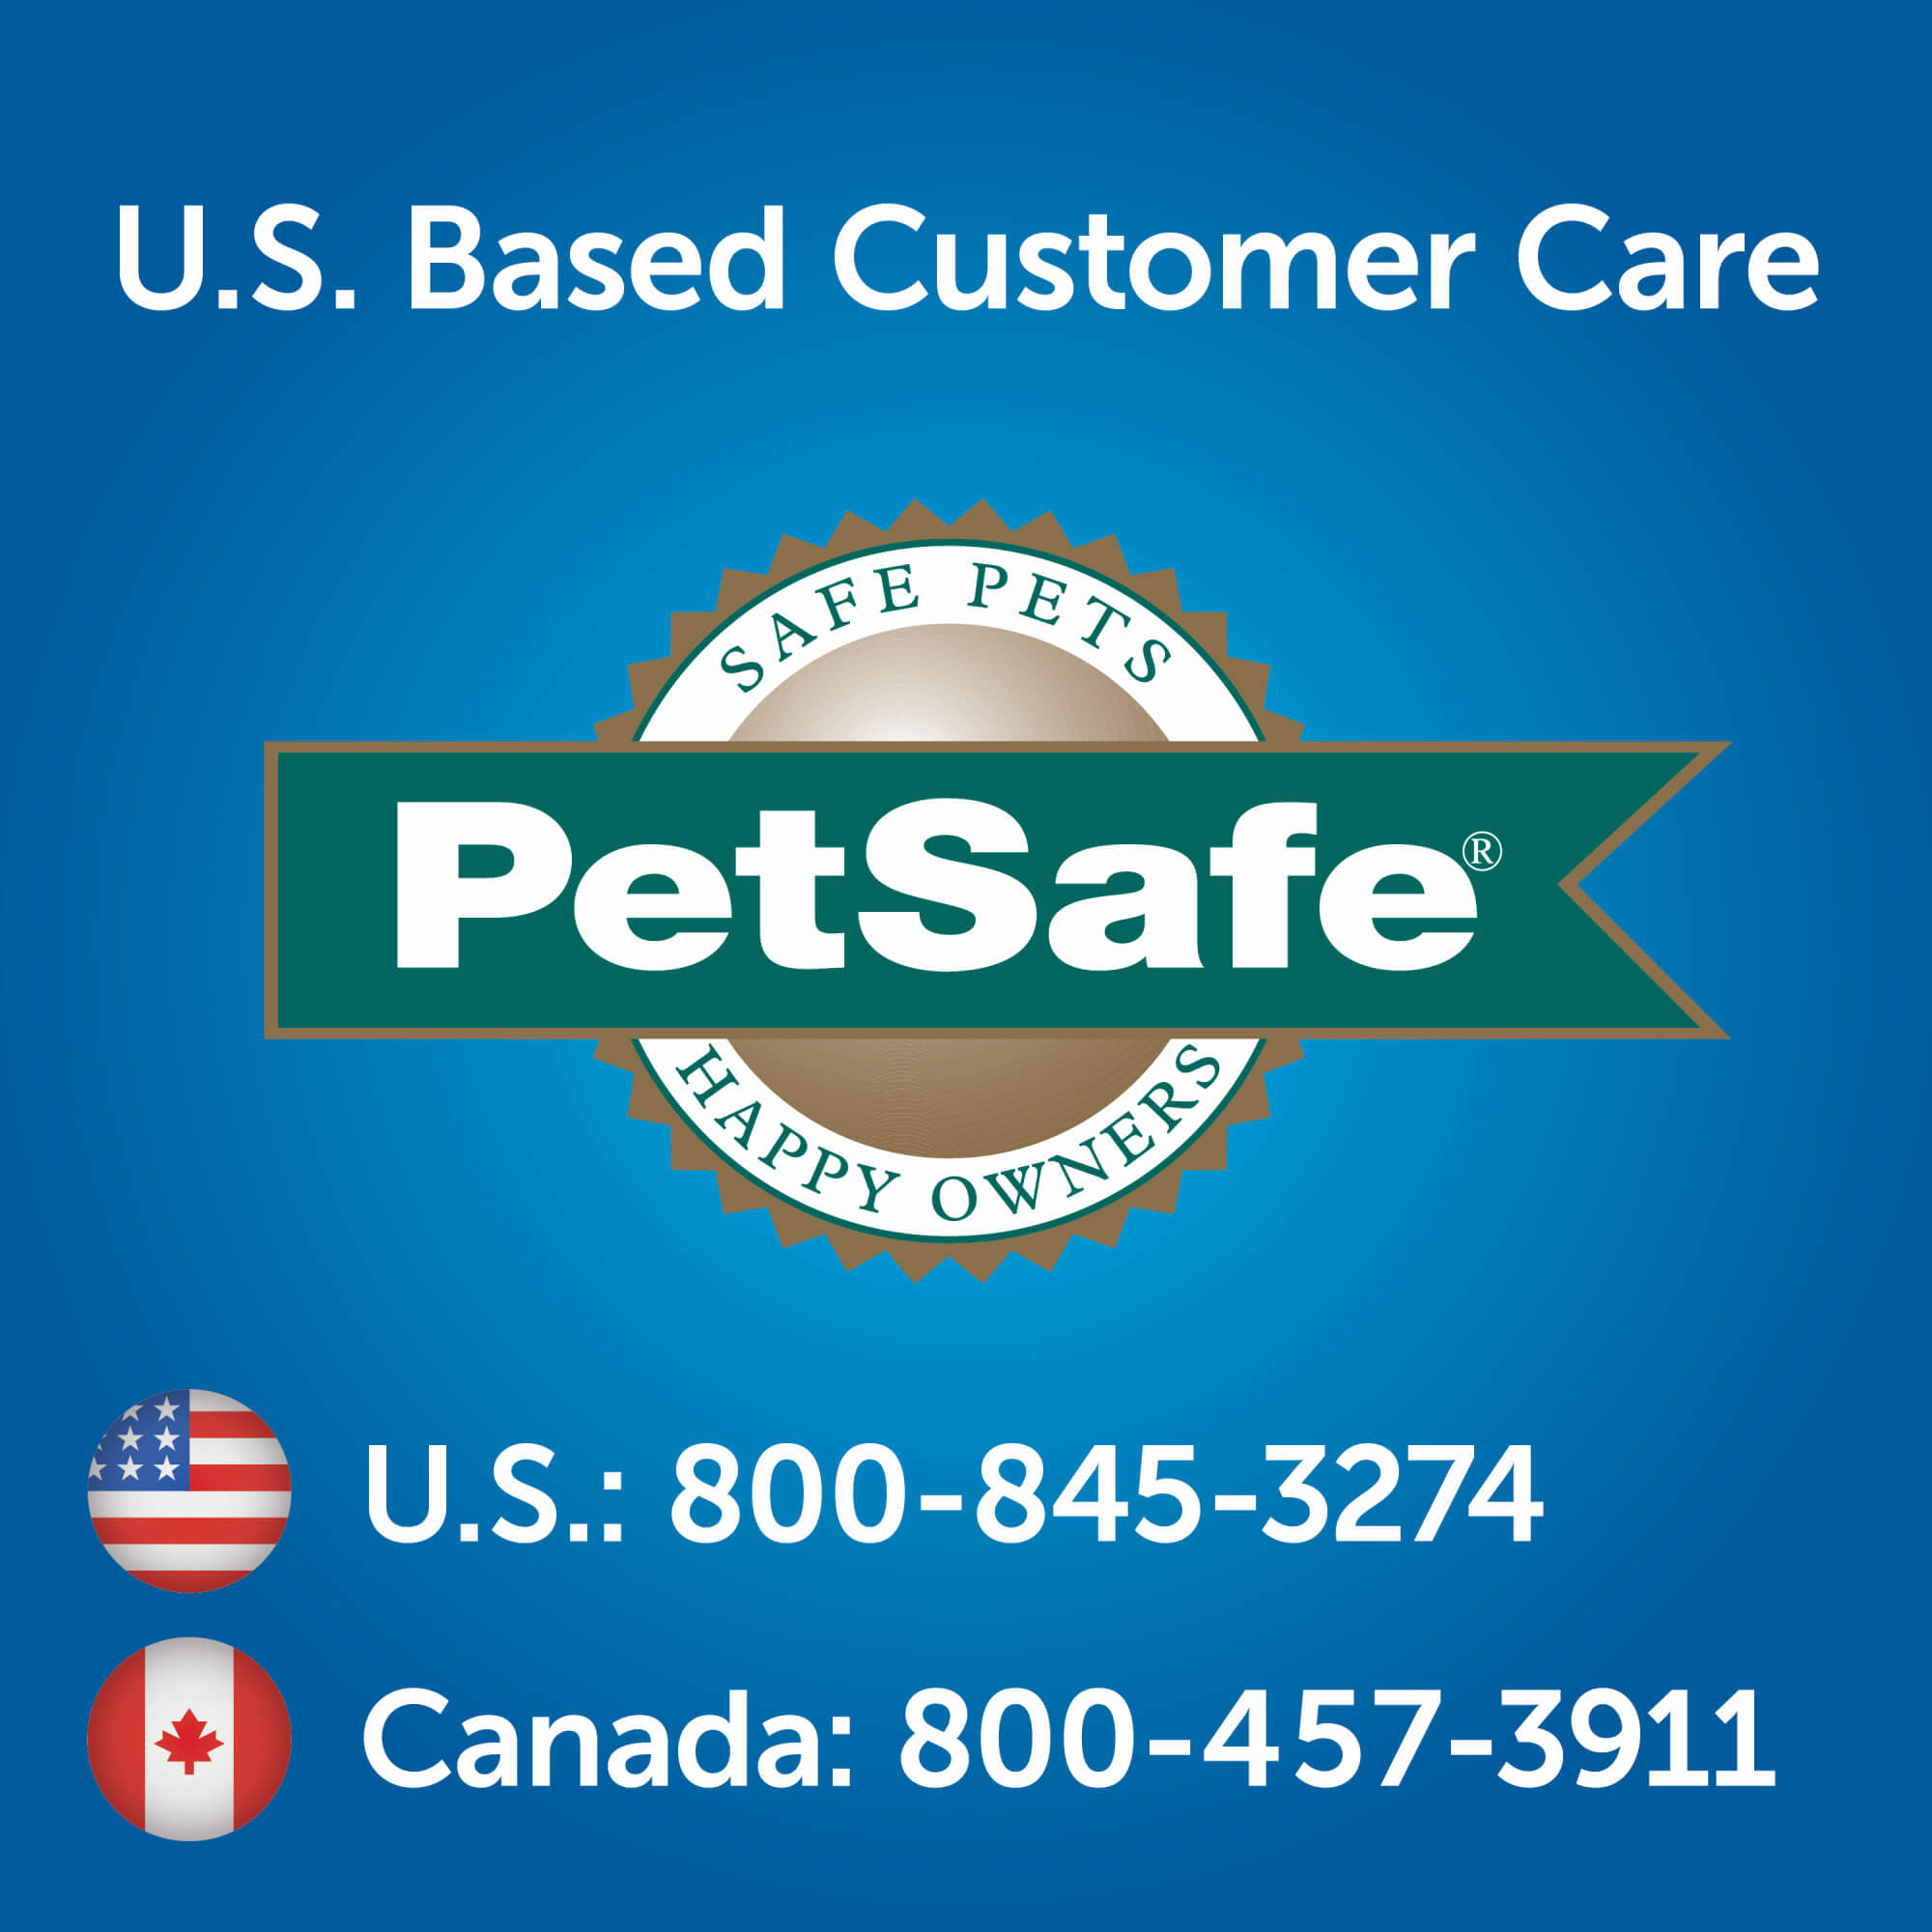 petsafe customer care number 